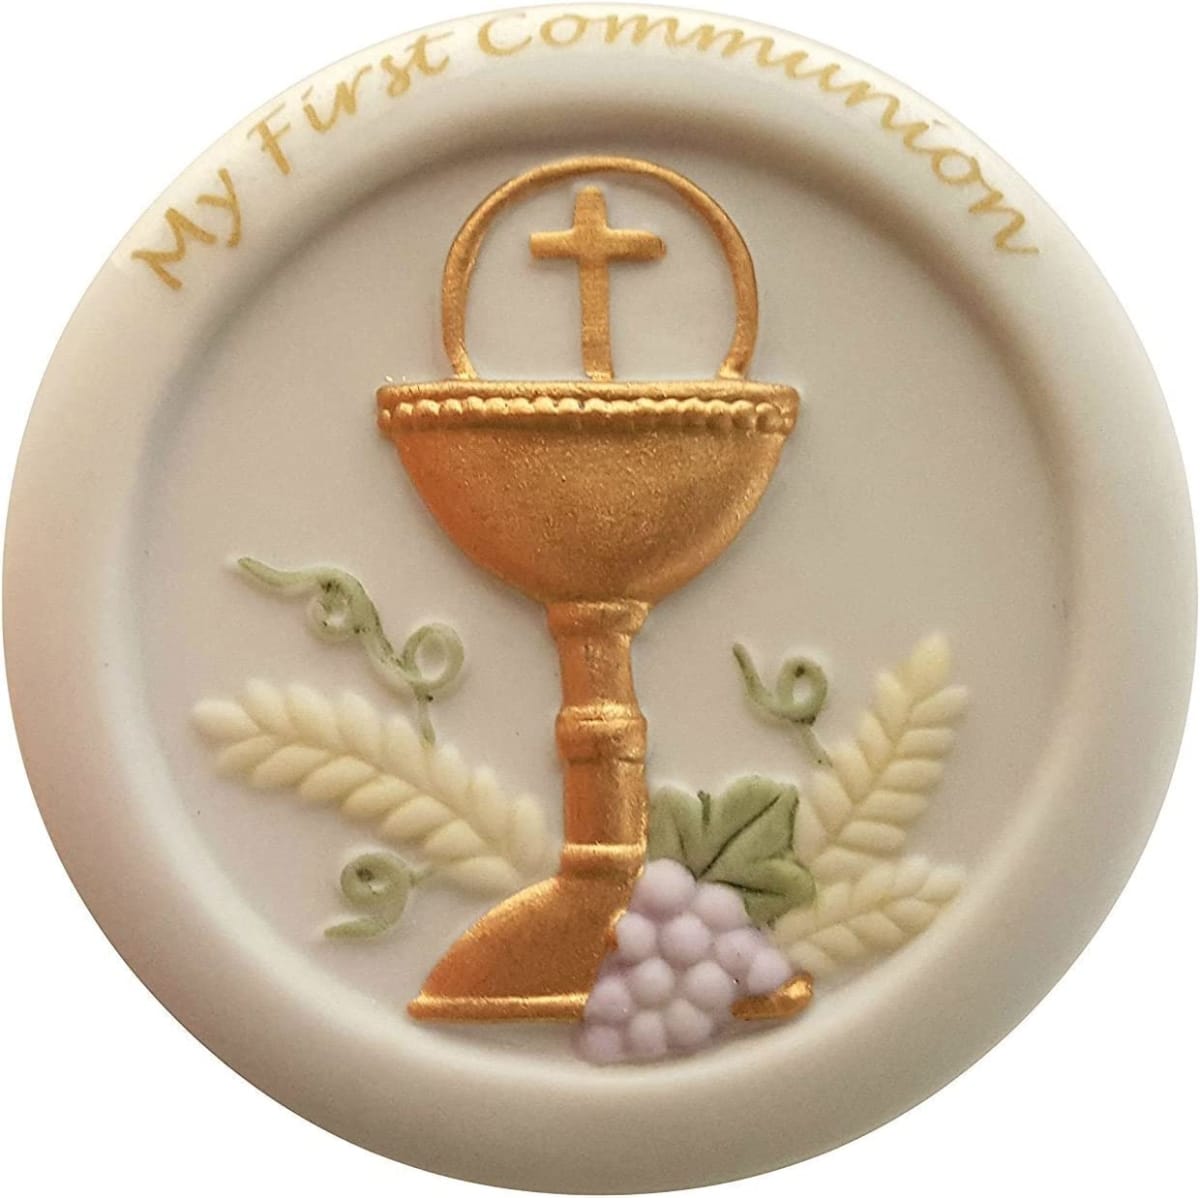 My First Communion Porcelain Keepsake Box